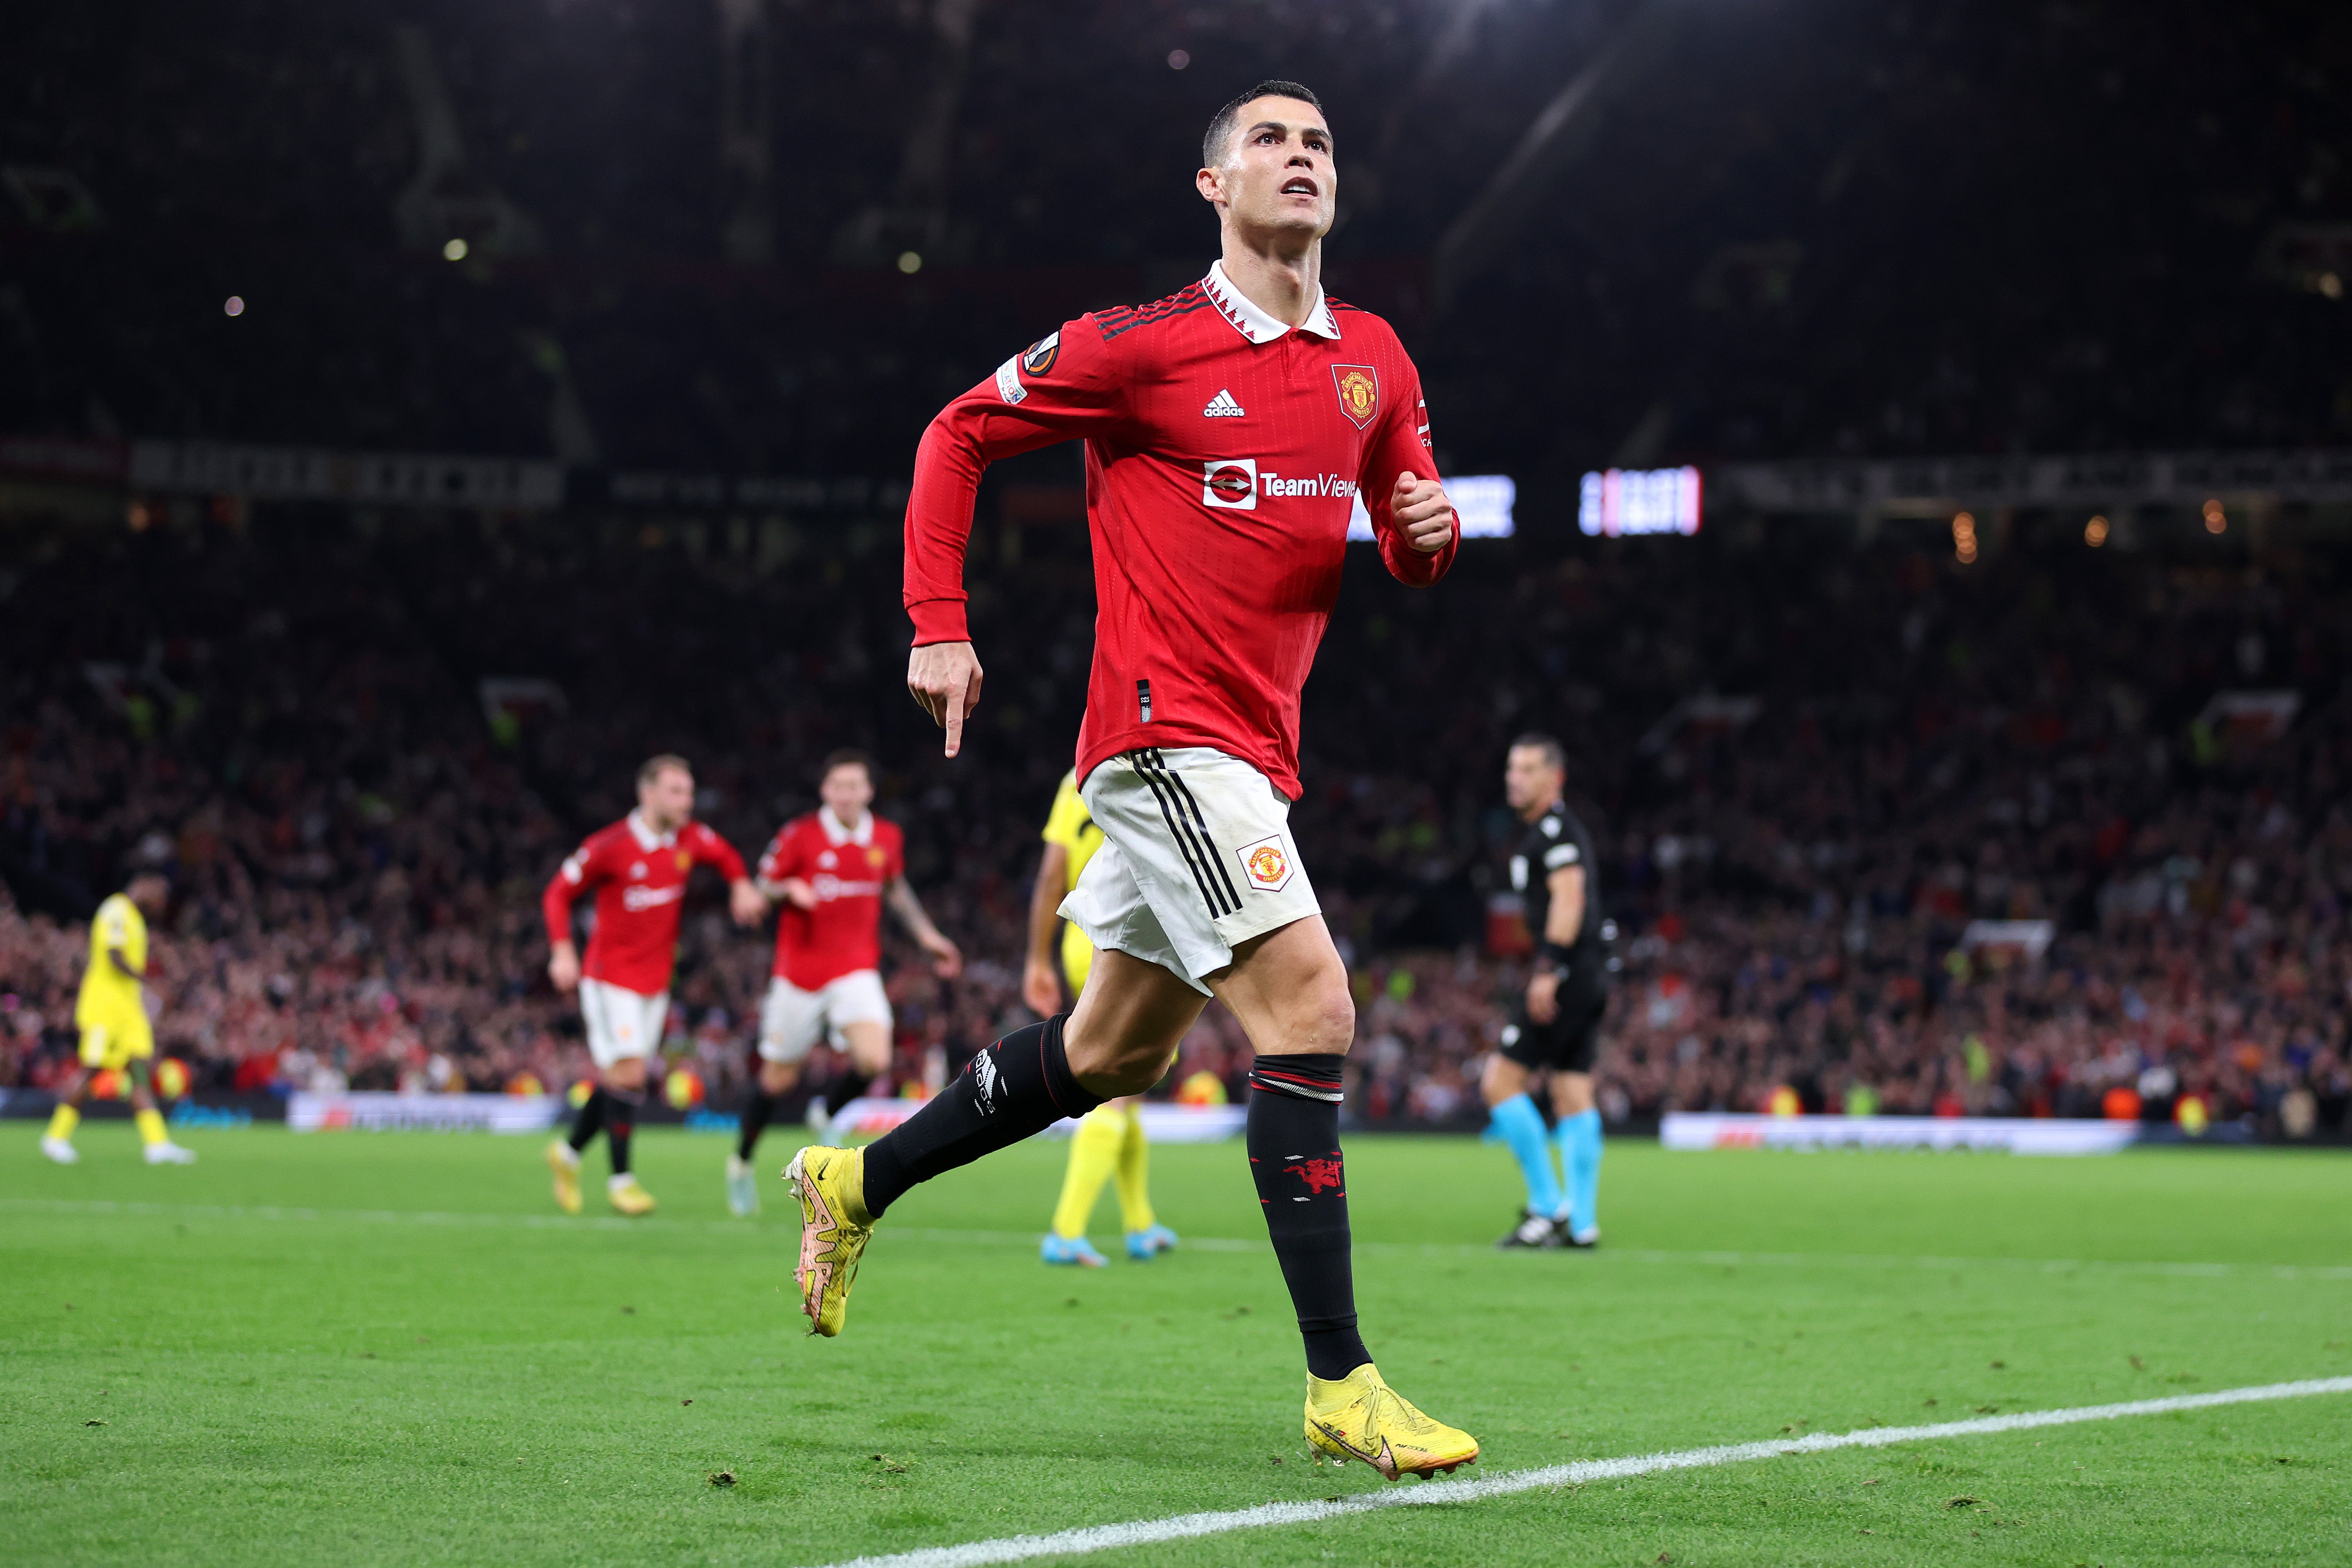 Cristiano Ronaldo leaves Manchester United: How a glorious return